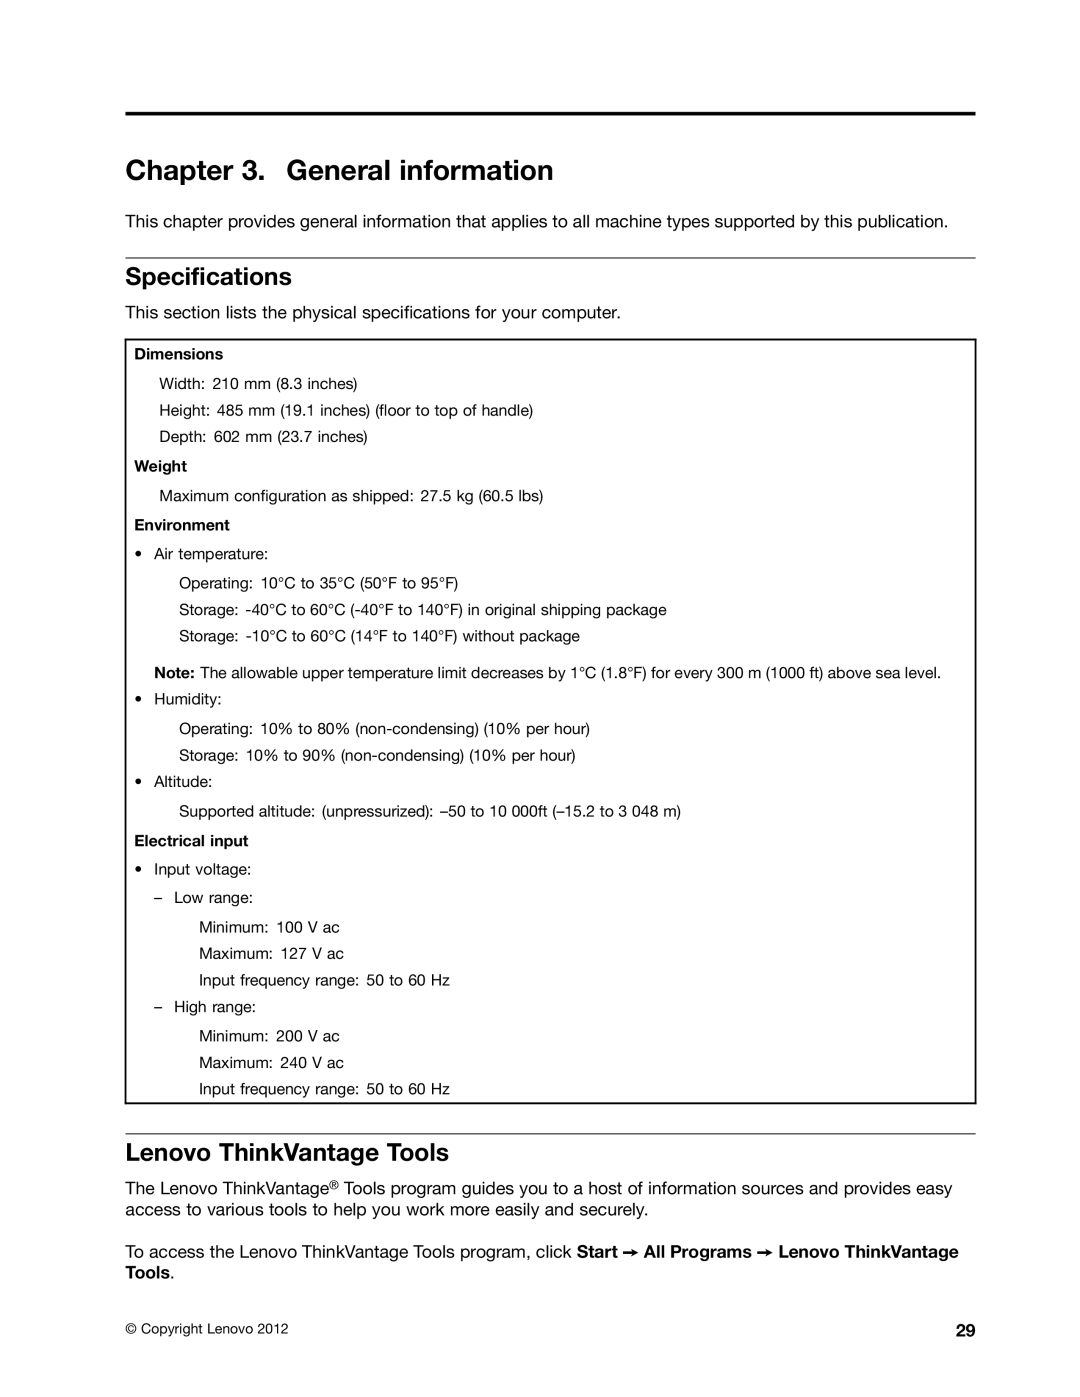 Lenovo 4229, 4223, 4228 manual General information, Specifications, Lenovo ThinkVantage Tools 